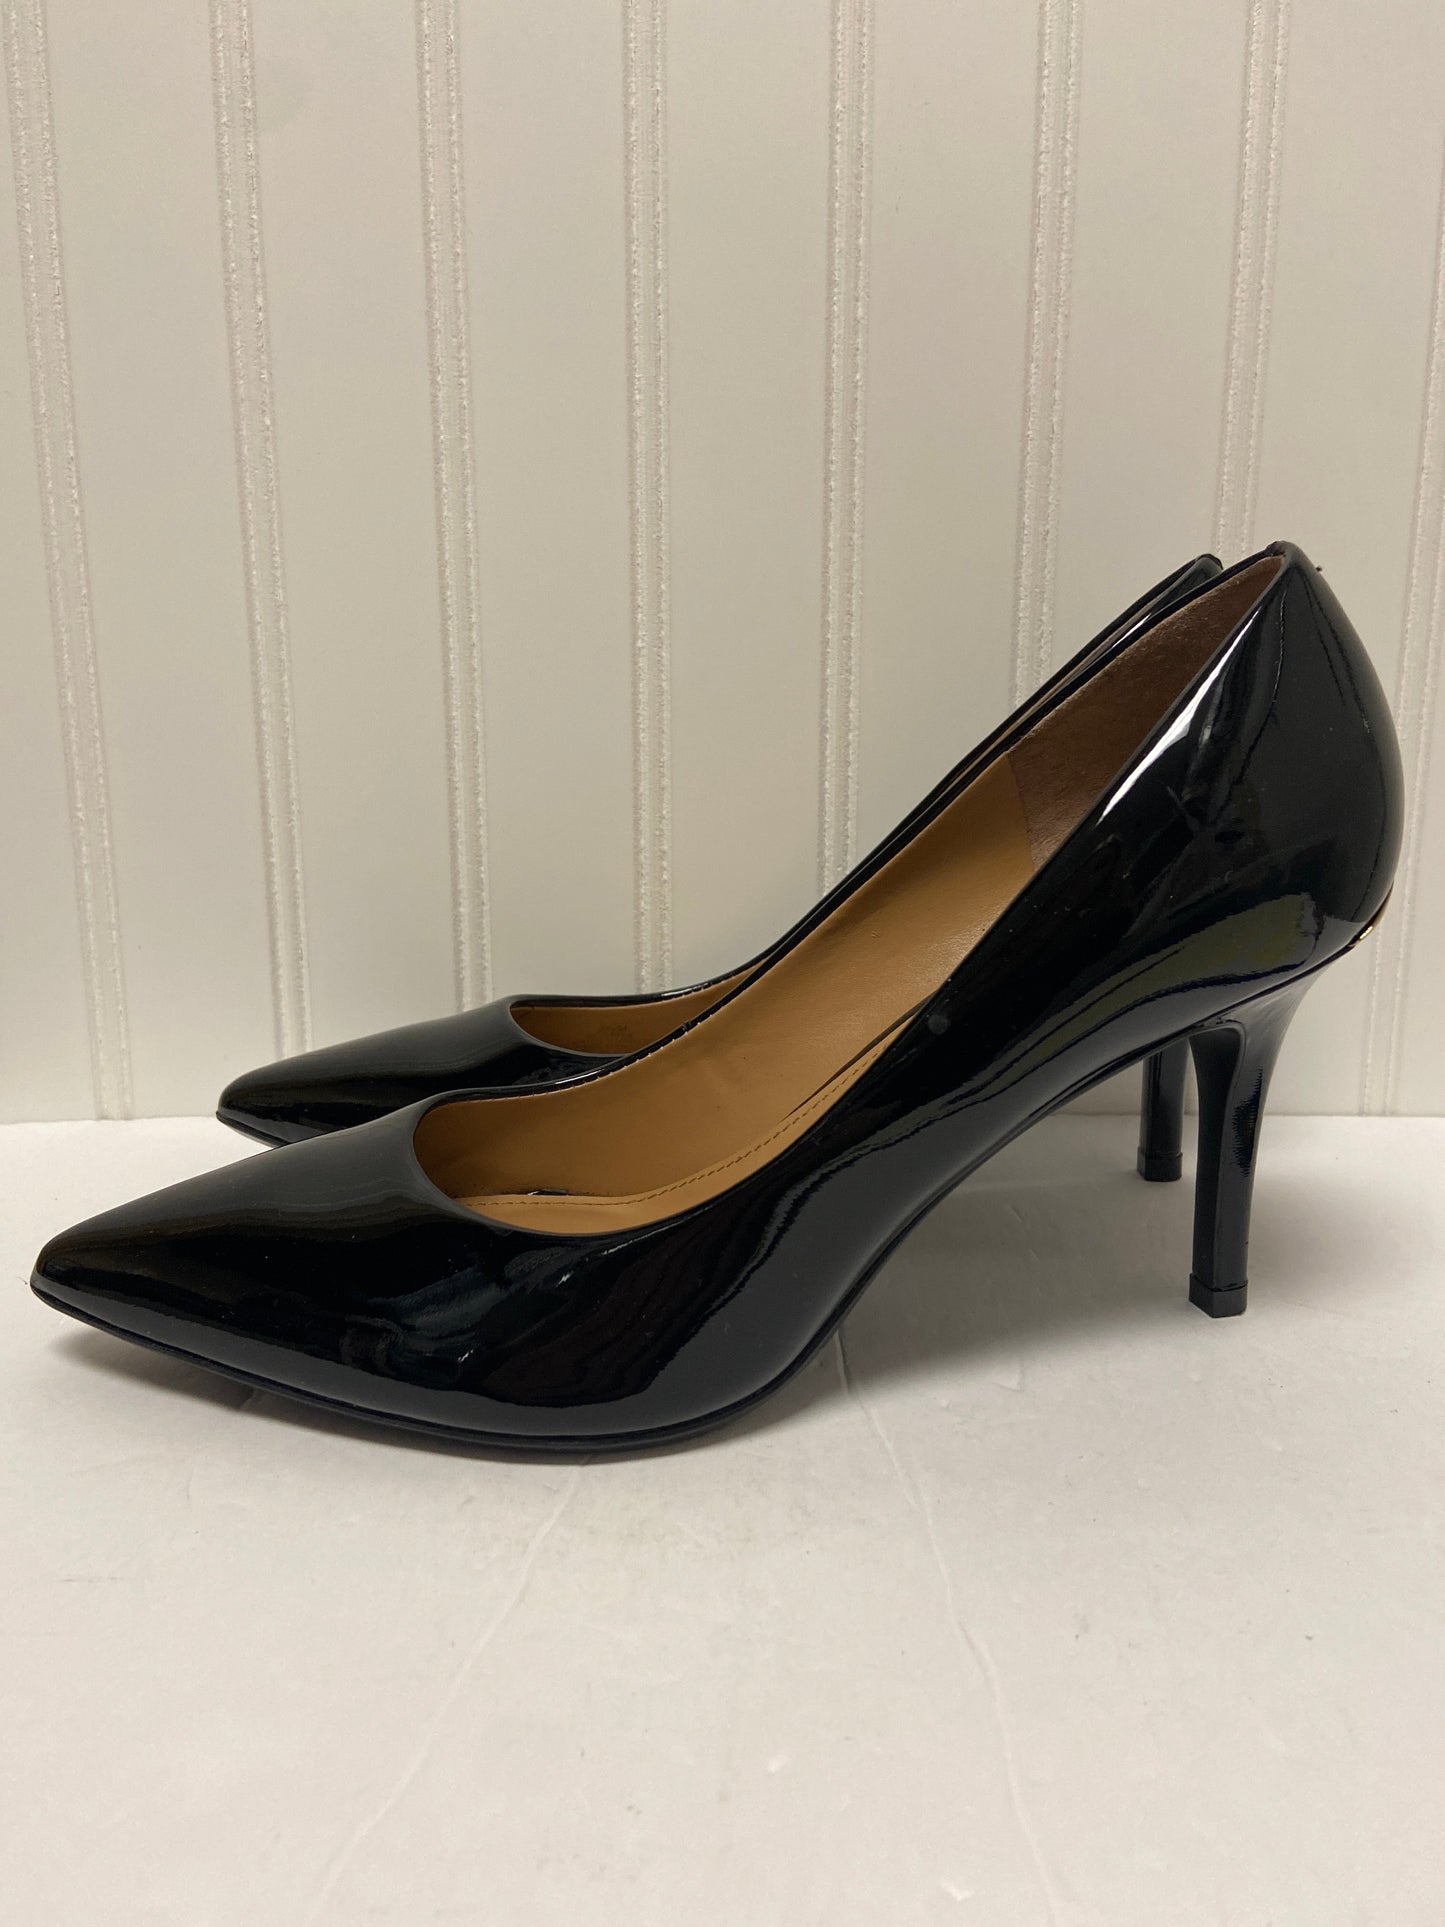 Shoes Heels Stiletto By Calvin Klein  Size: 8.5